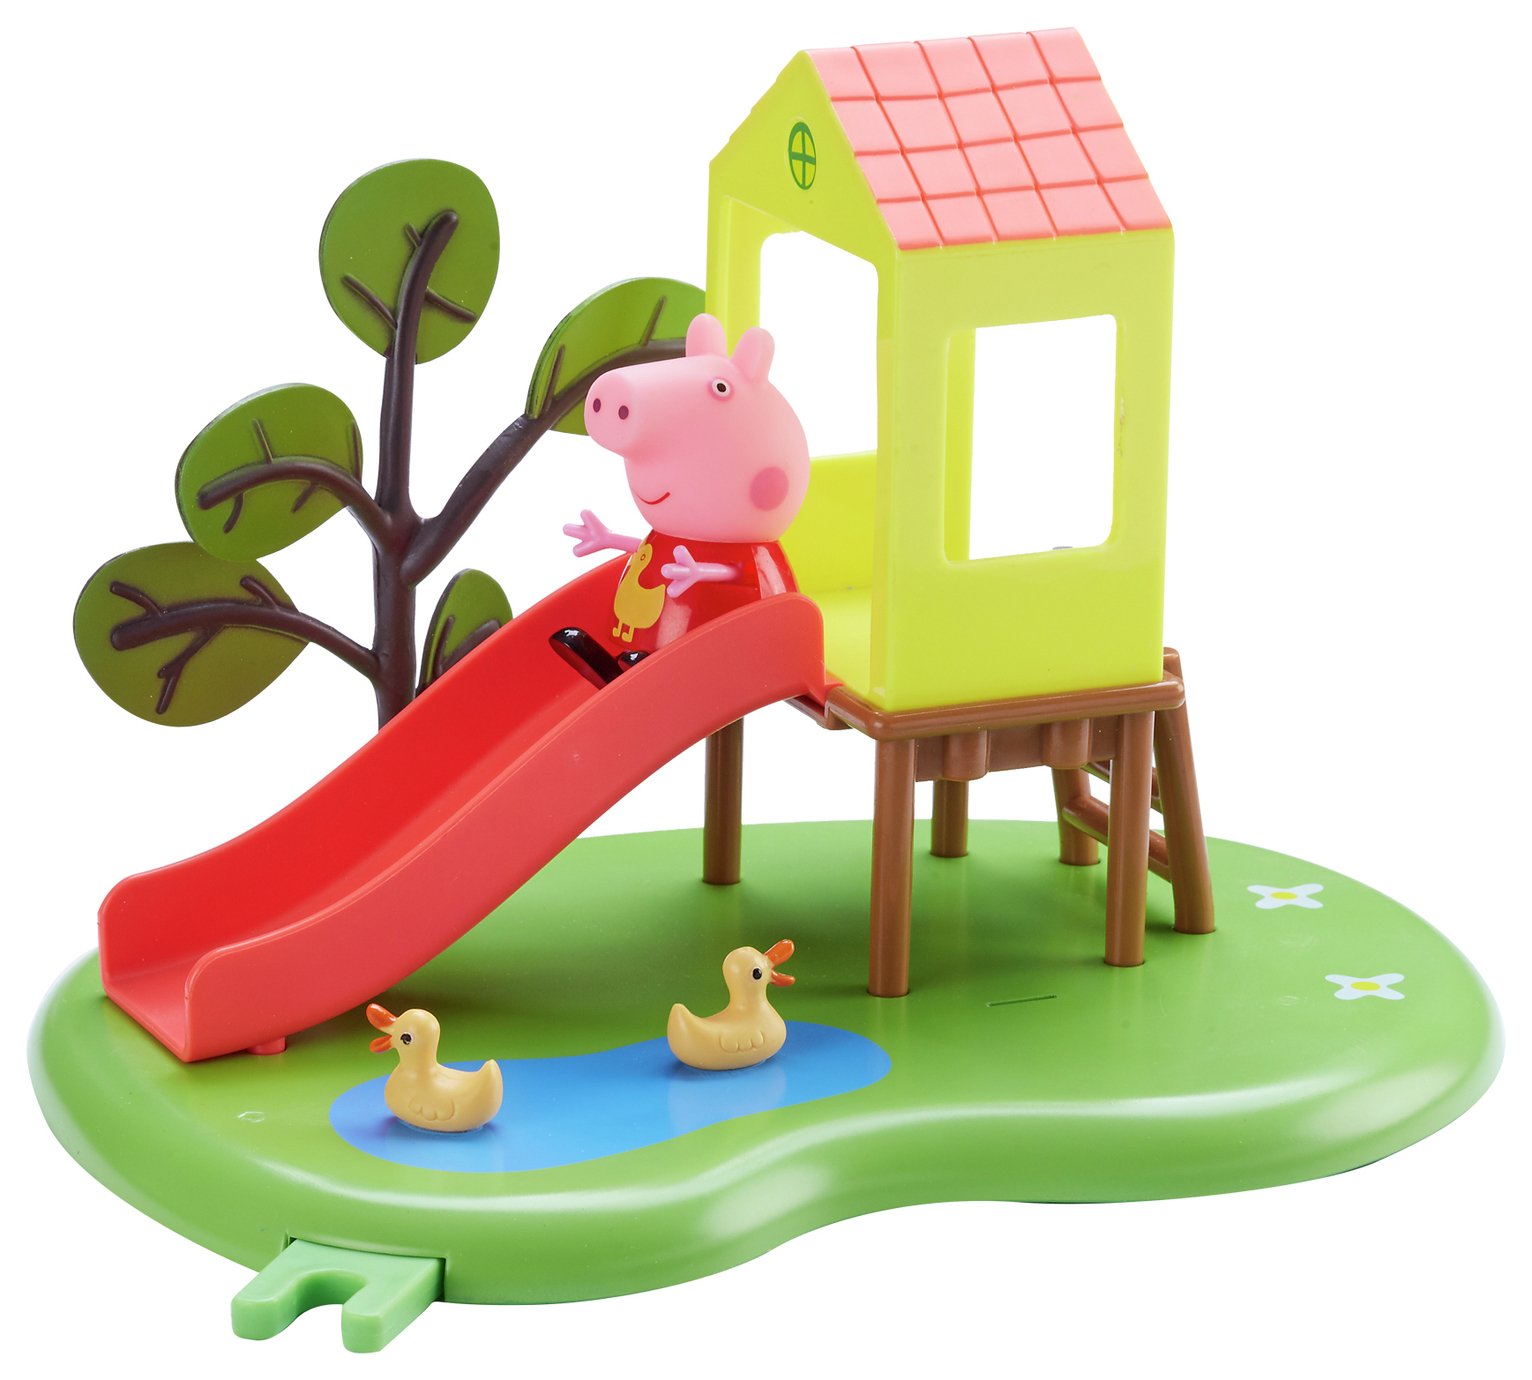 Peppa Pig Outdoor Fun Playset Assortment